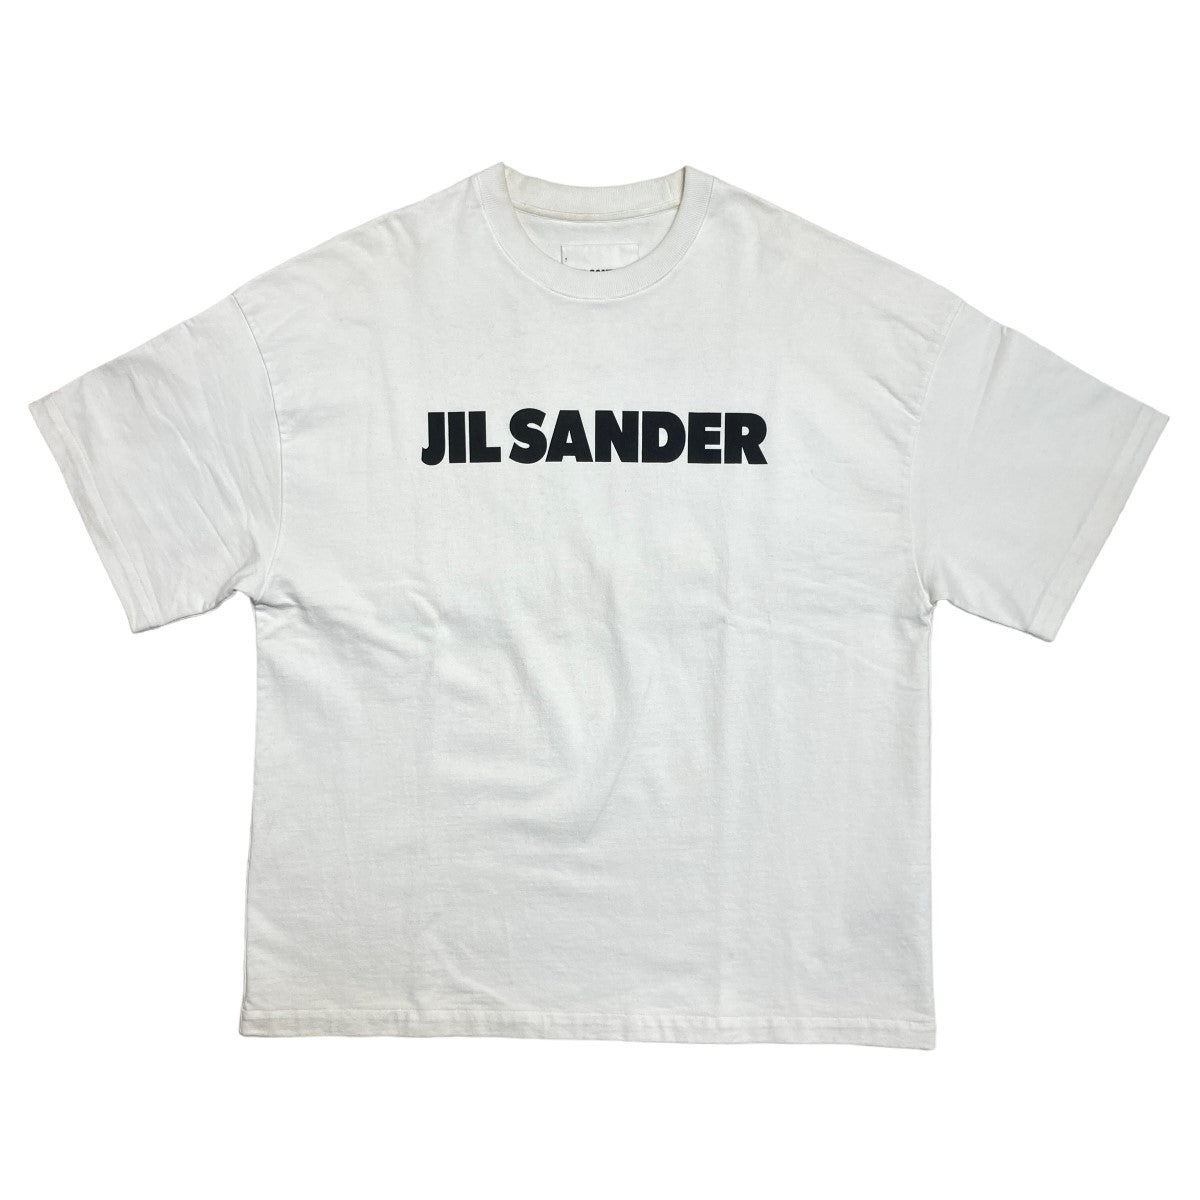 JIL SANDER(ジルサンダー) ロゴプリント 半袖Tシャツ J21GC0001 ...